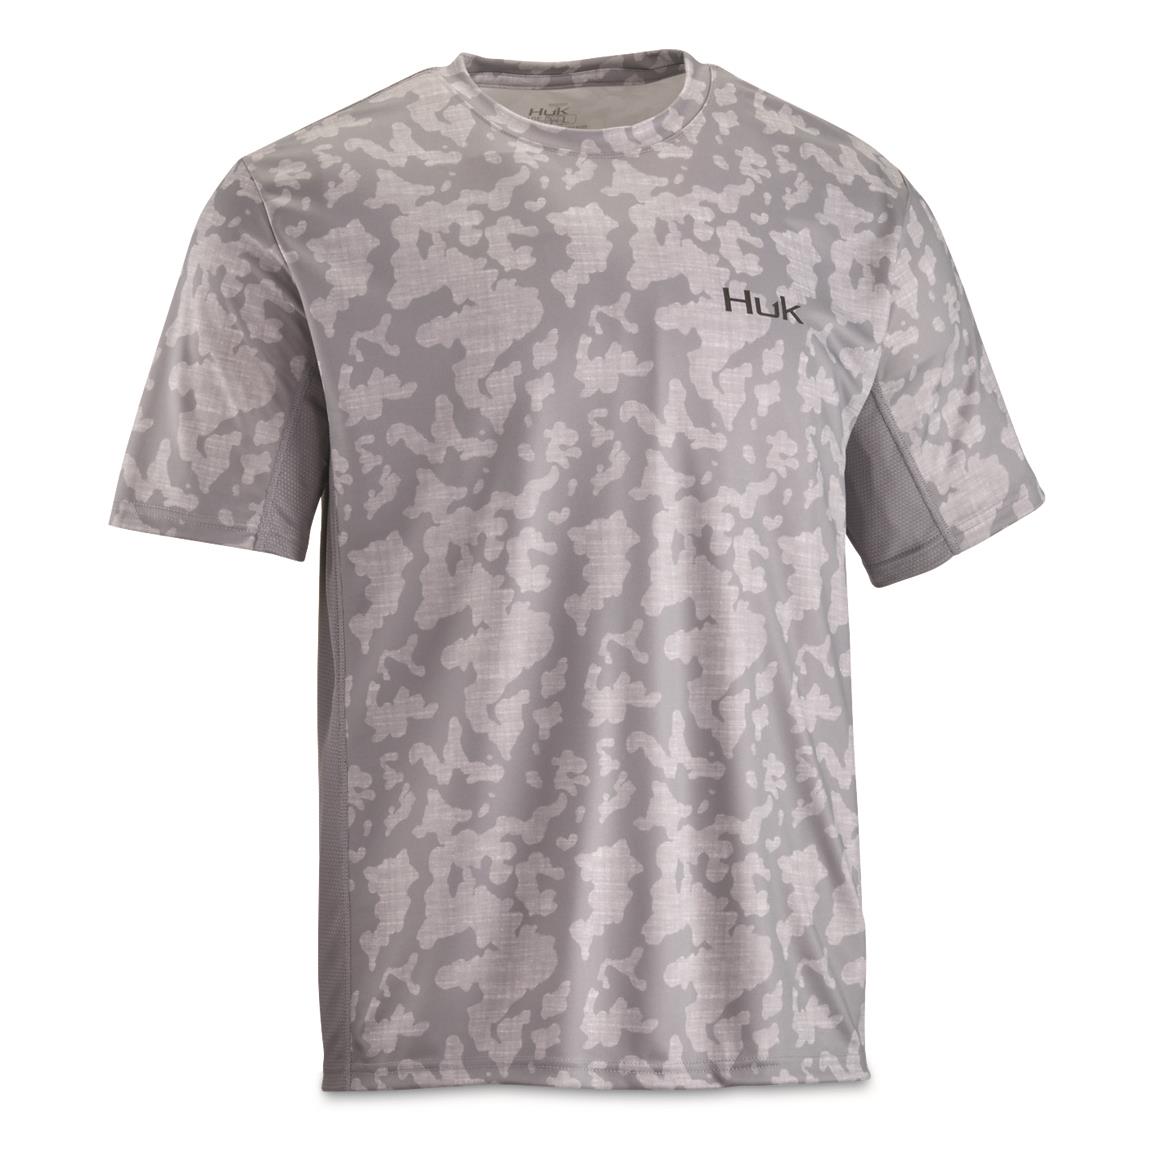 Huk Men's ICON X Running Lakes Short Sleeve Shirt, Overcast Gray